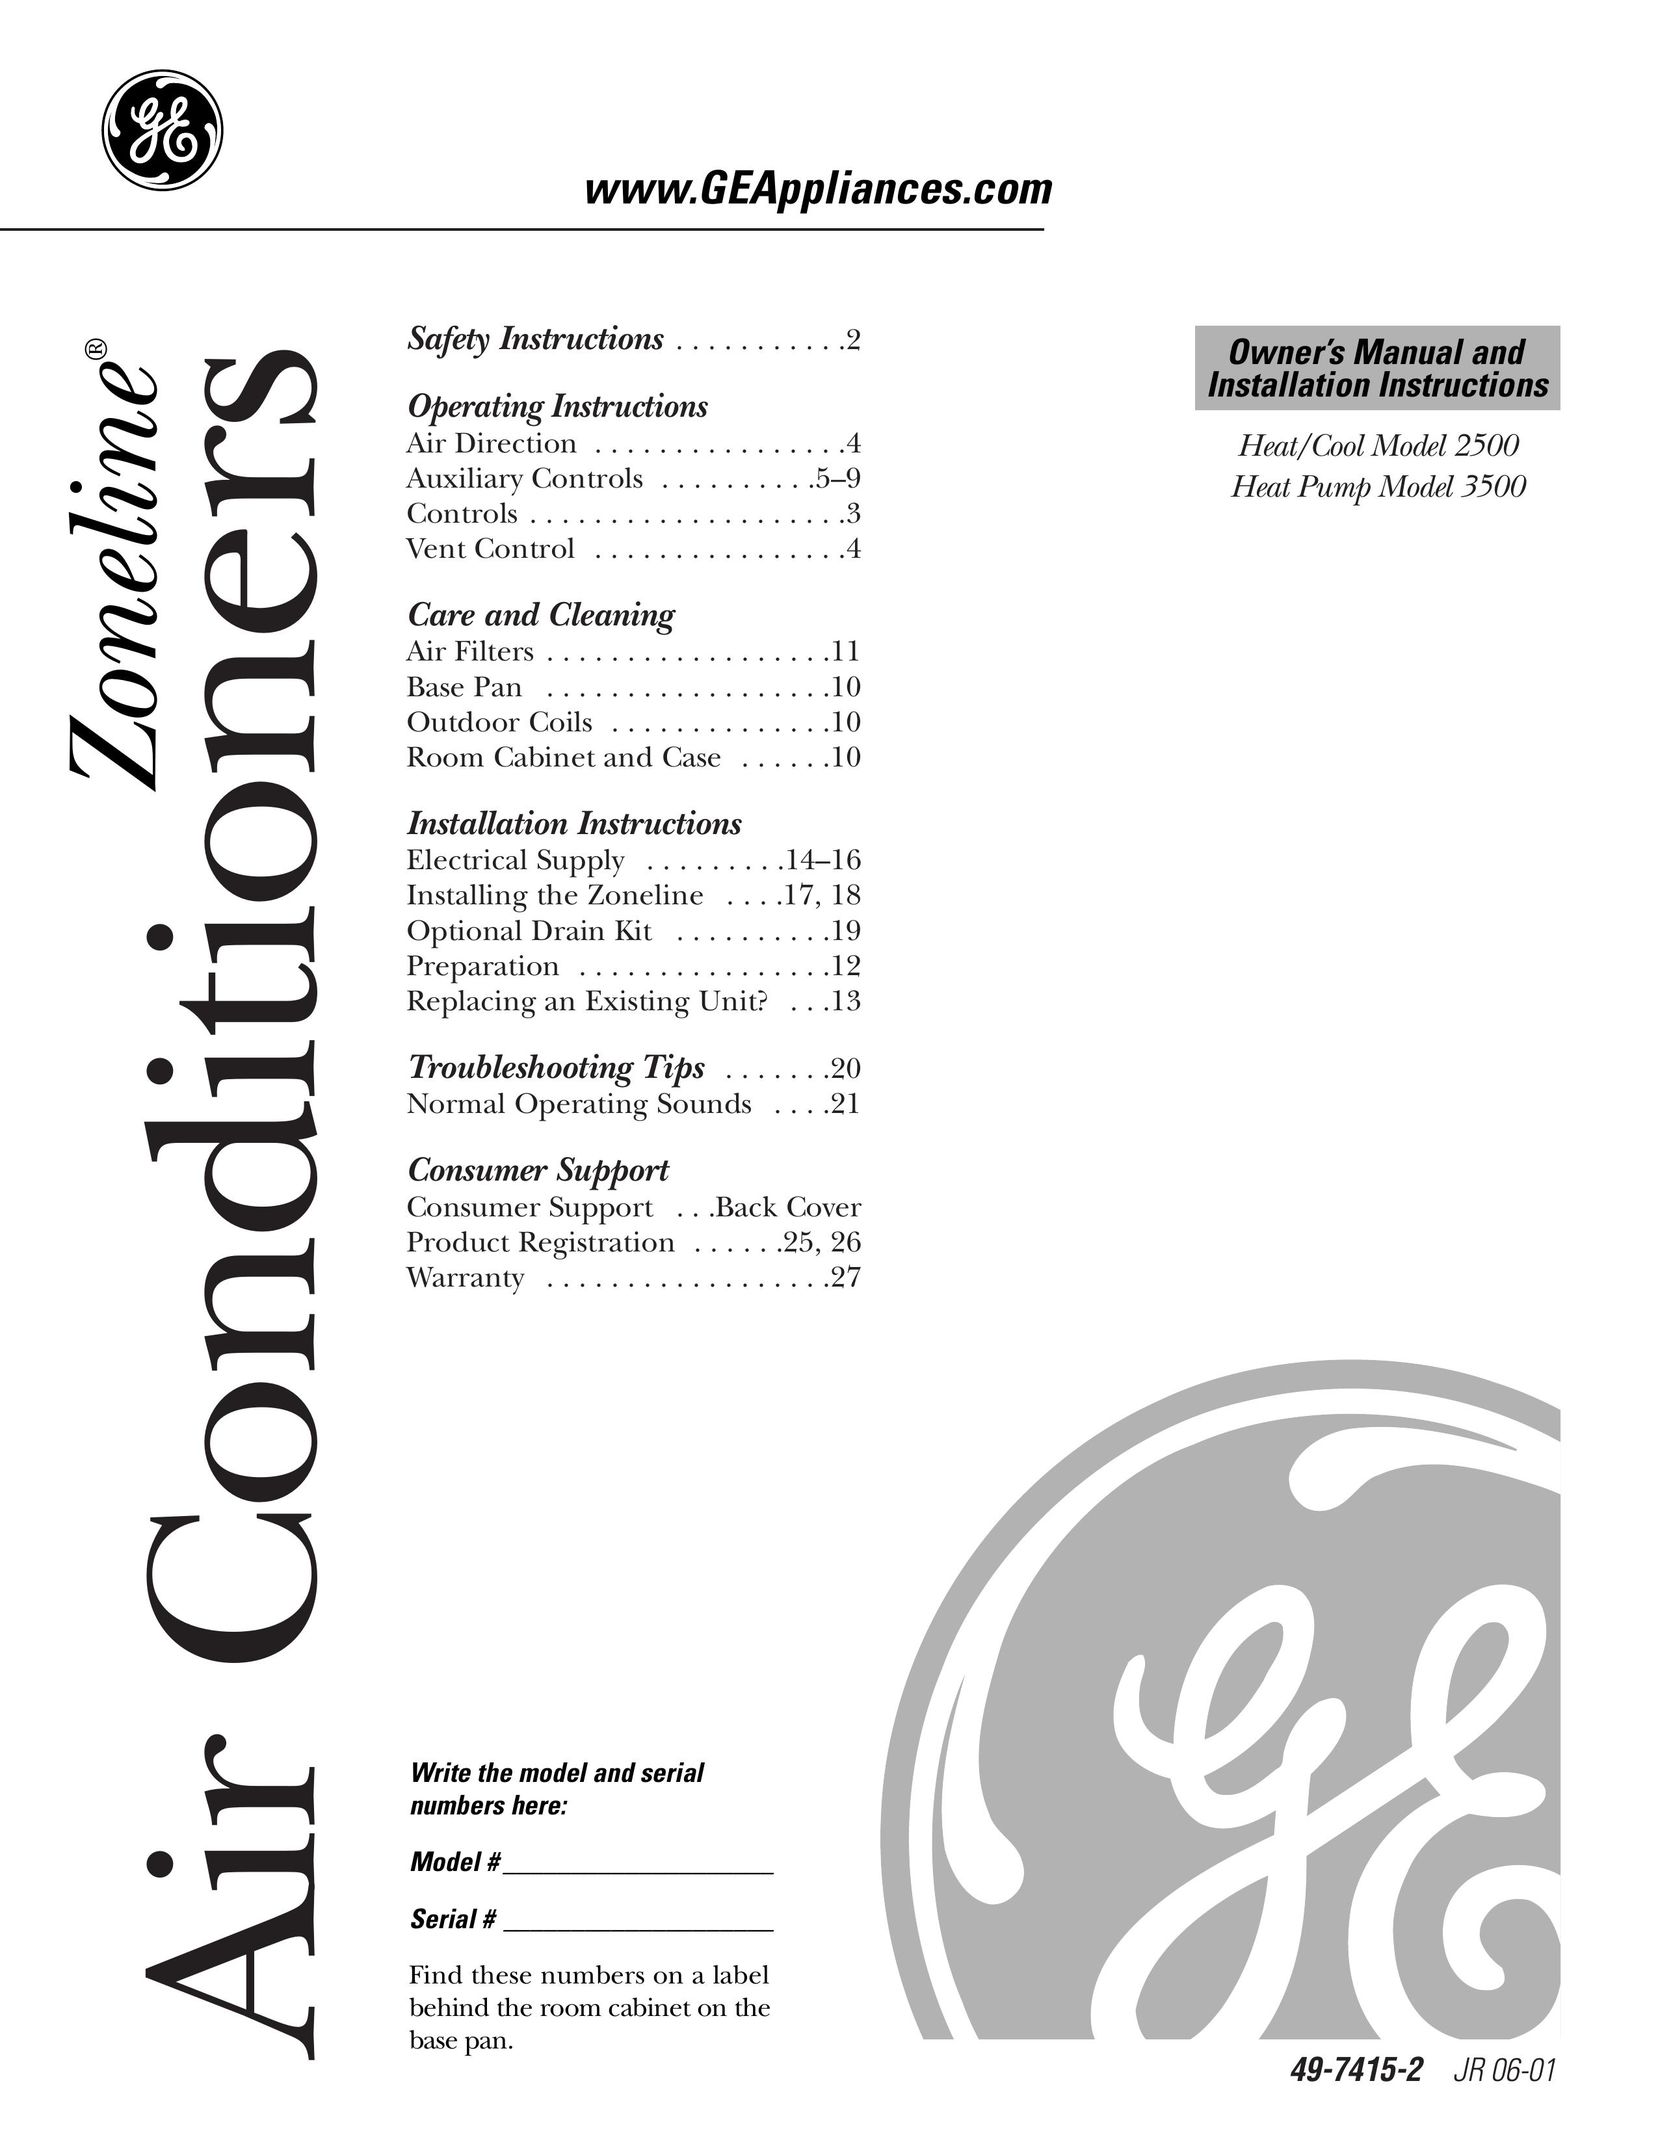 GE 2500 Air Conditioner User Manual